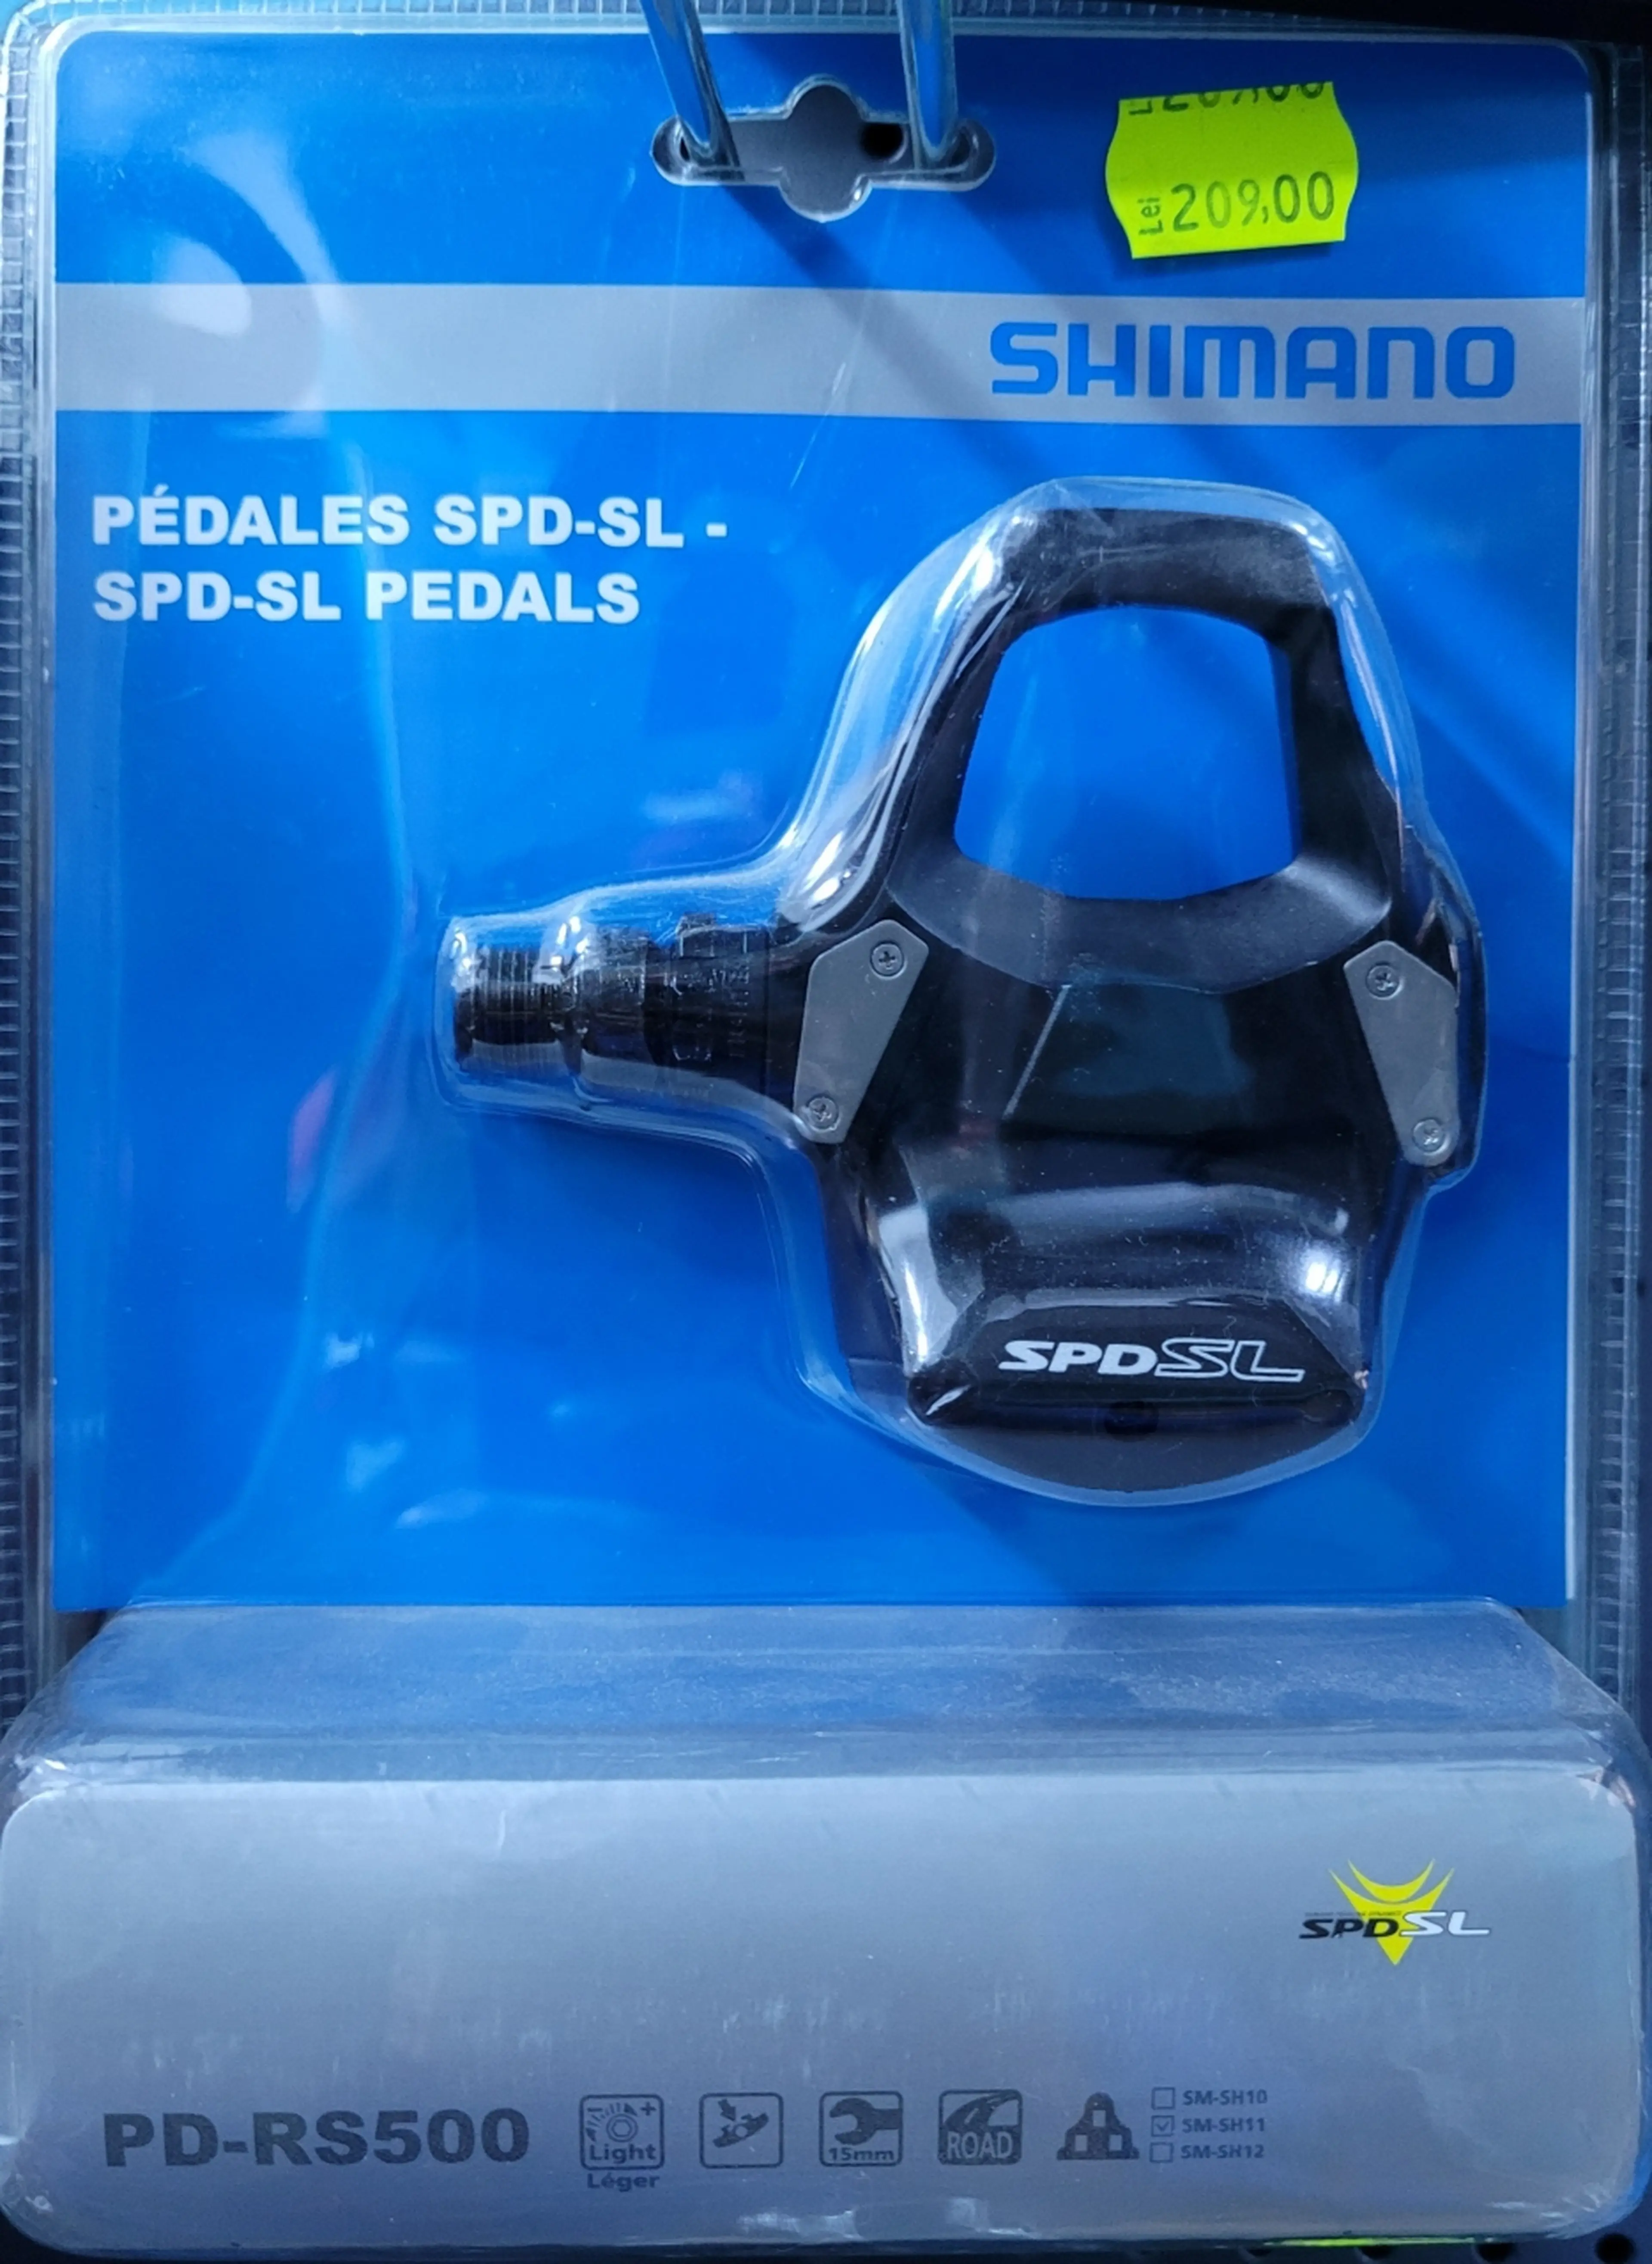 Image Pedale SPD RS 500